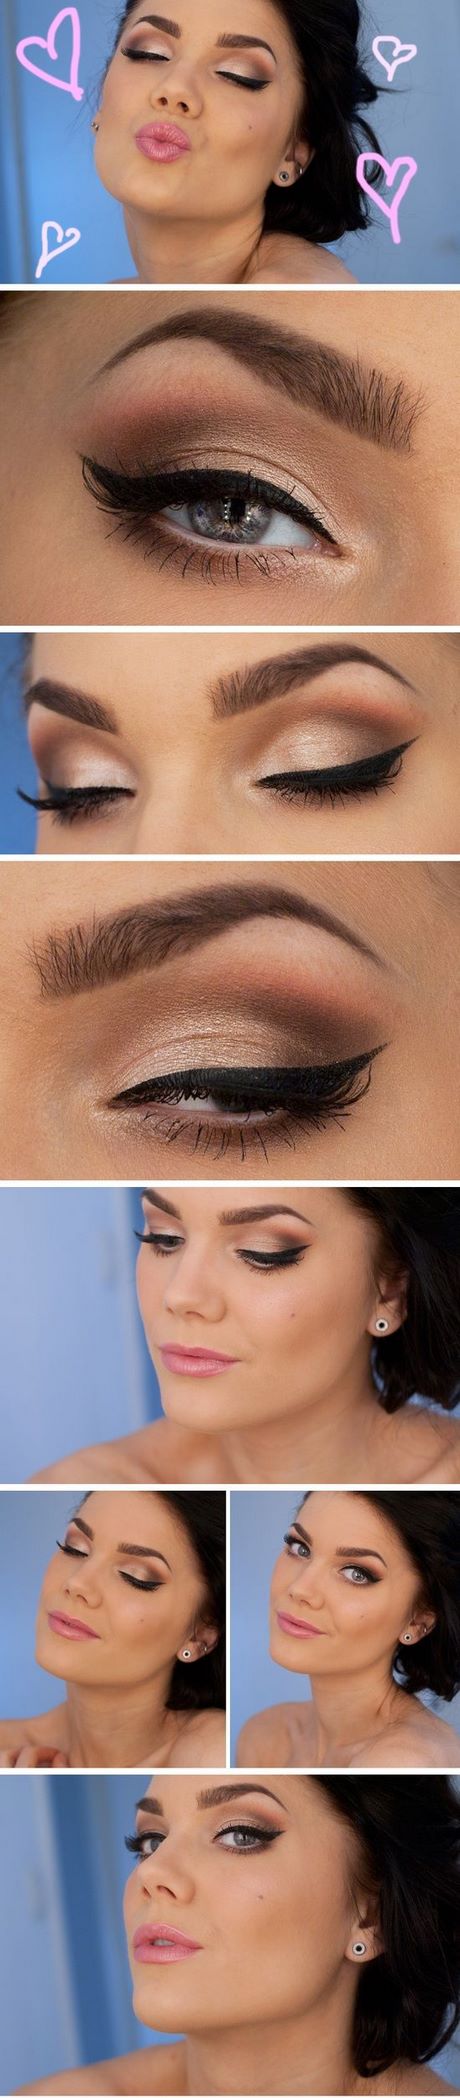 linda-hallberg-makeup-tutorials-eyeliner-57_15 Linda hallberg make-up tutorials eyeliner